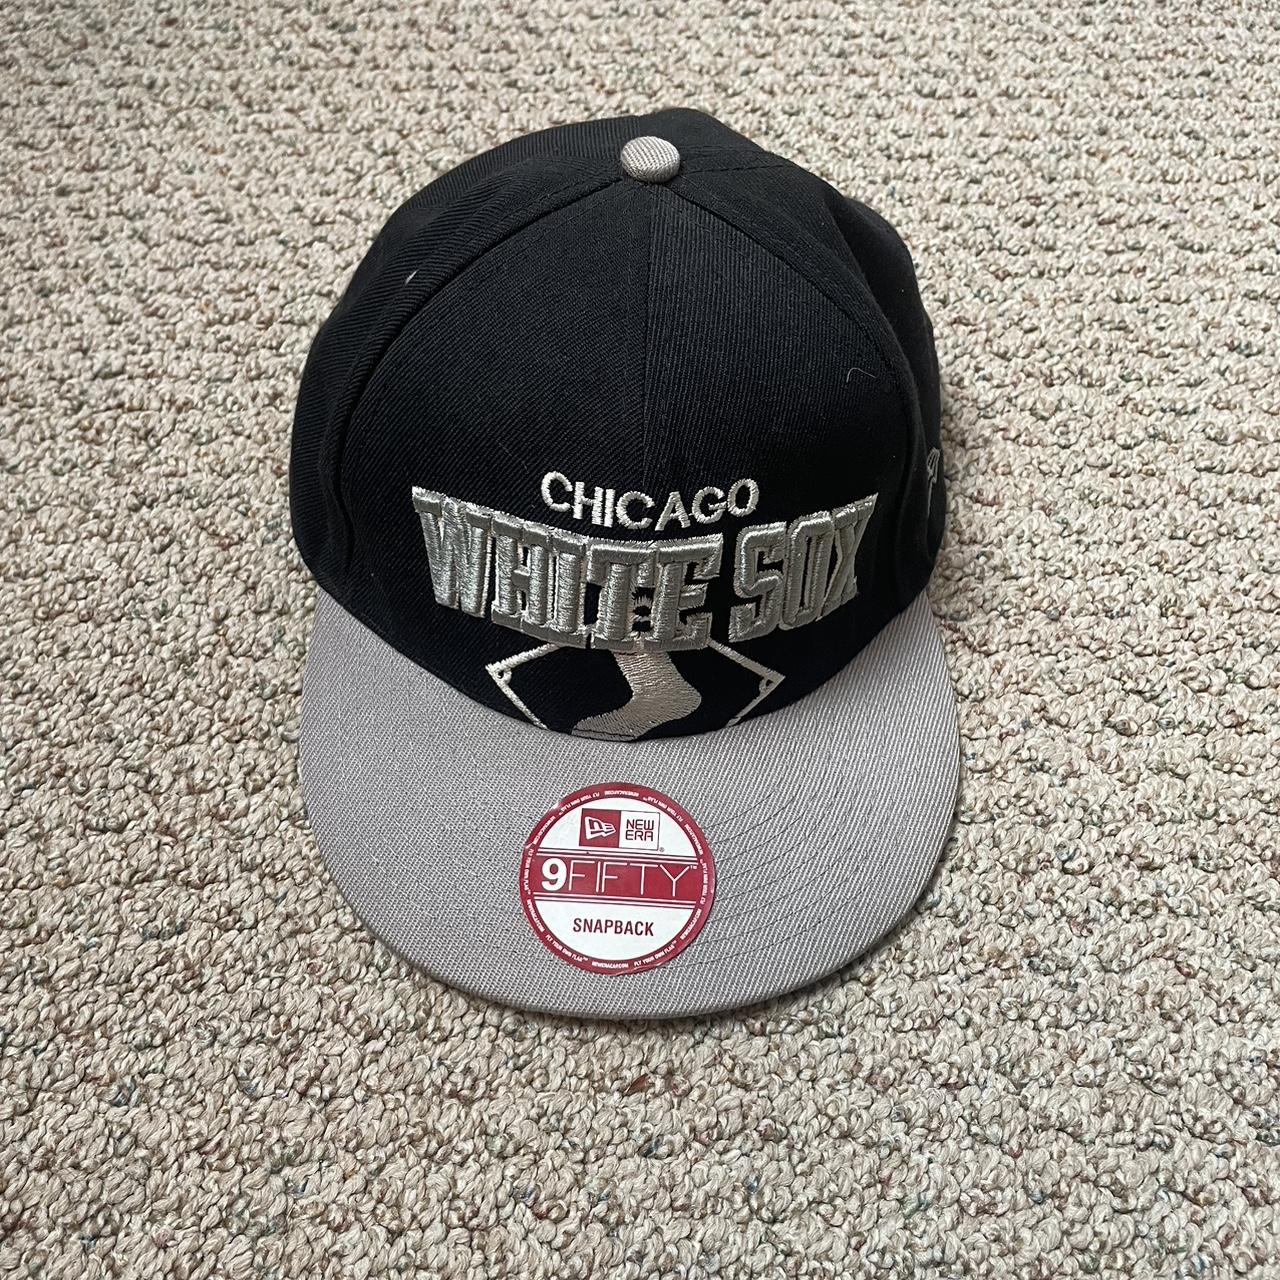 Men's New Era White Chicago White Sox Vintage 9FIFTY Snapback Hat